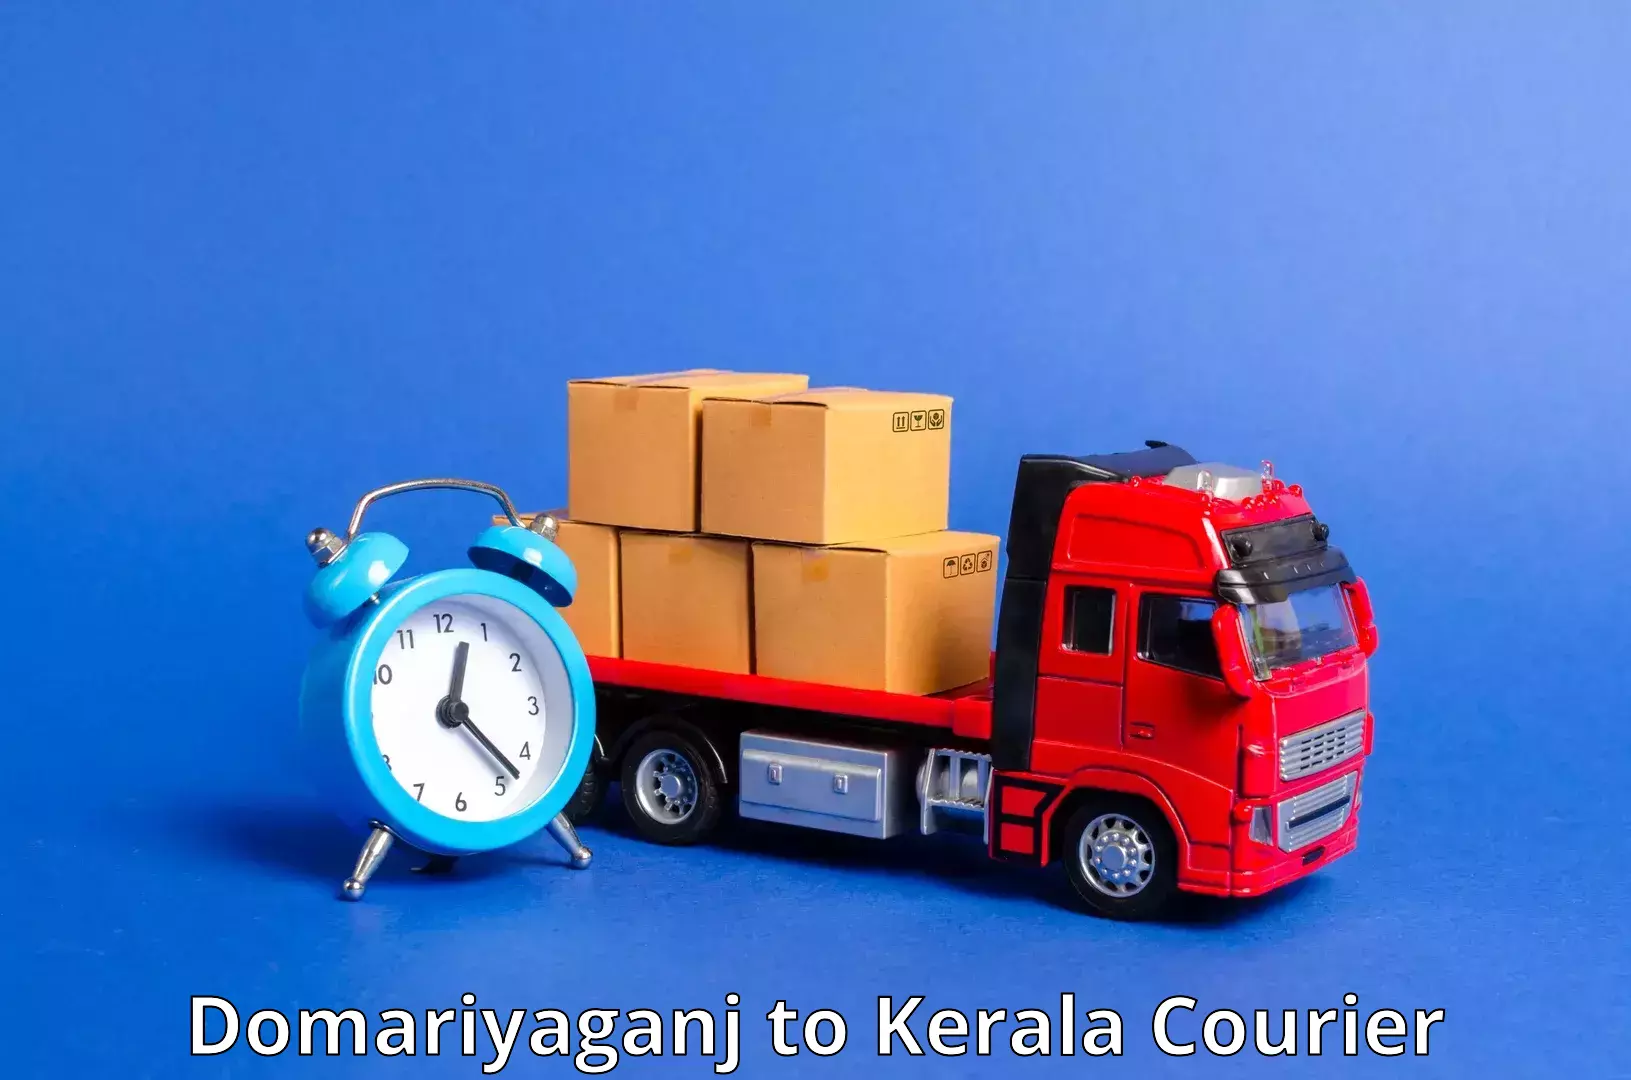 Cash on delivery service Domariyaganj to Kozhikode